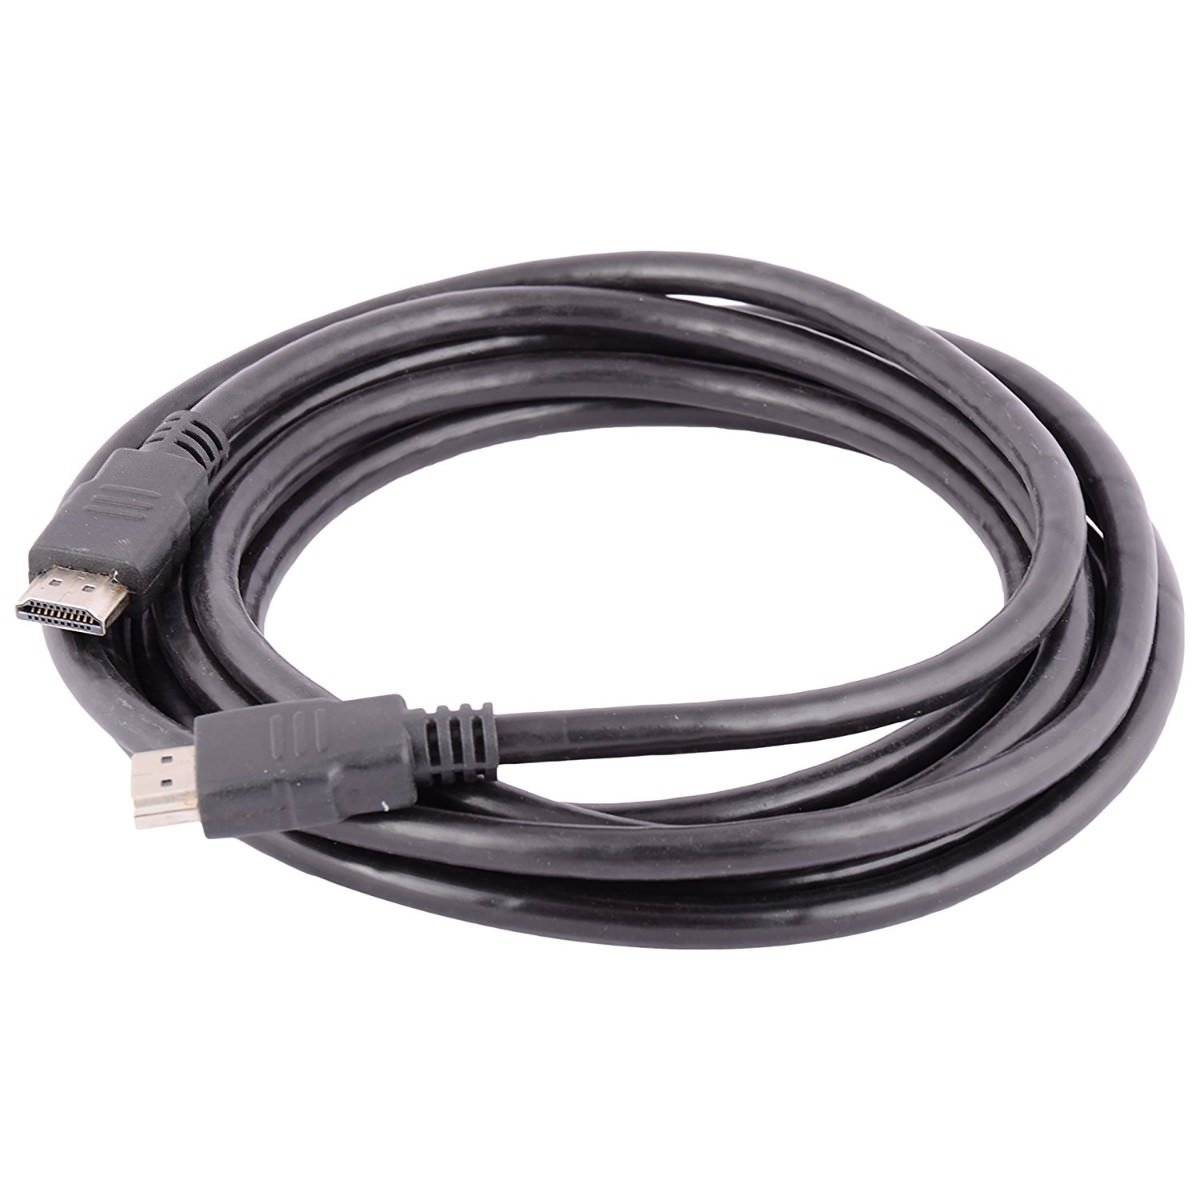 AD-Net 1.5mtr HDMI Cable (Black)